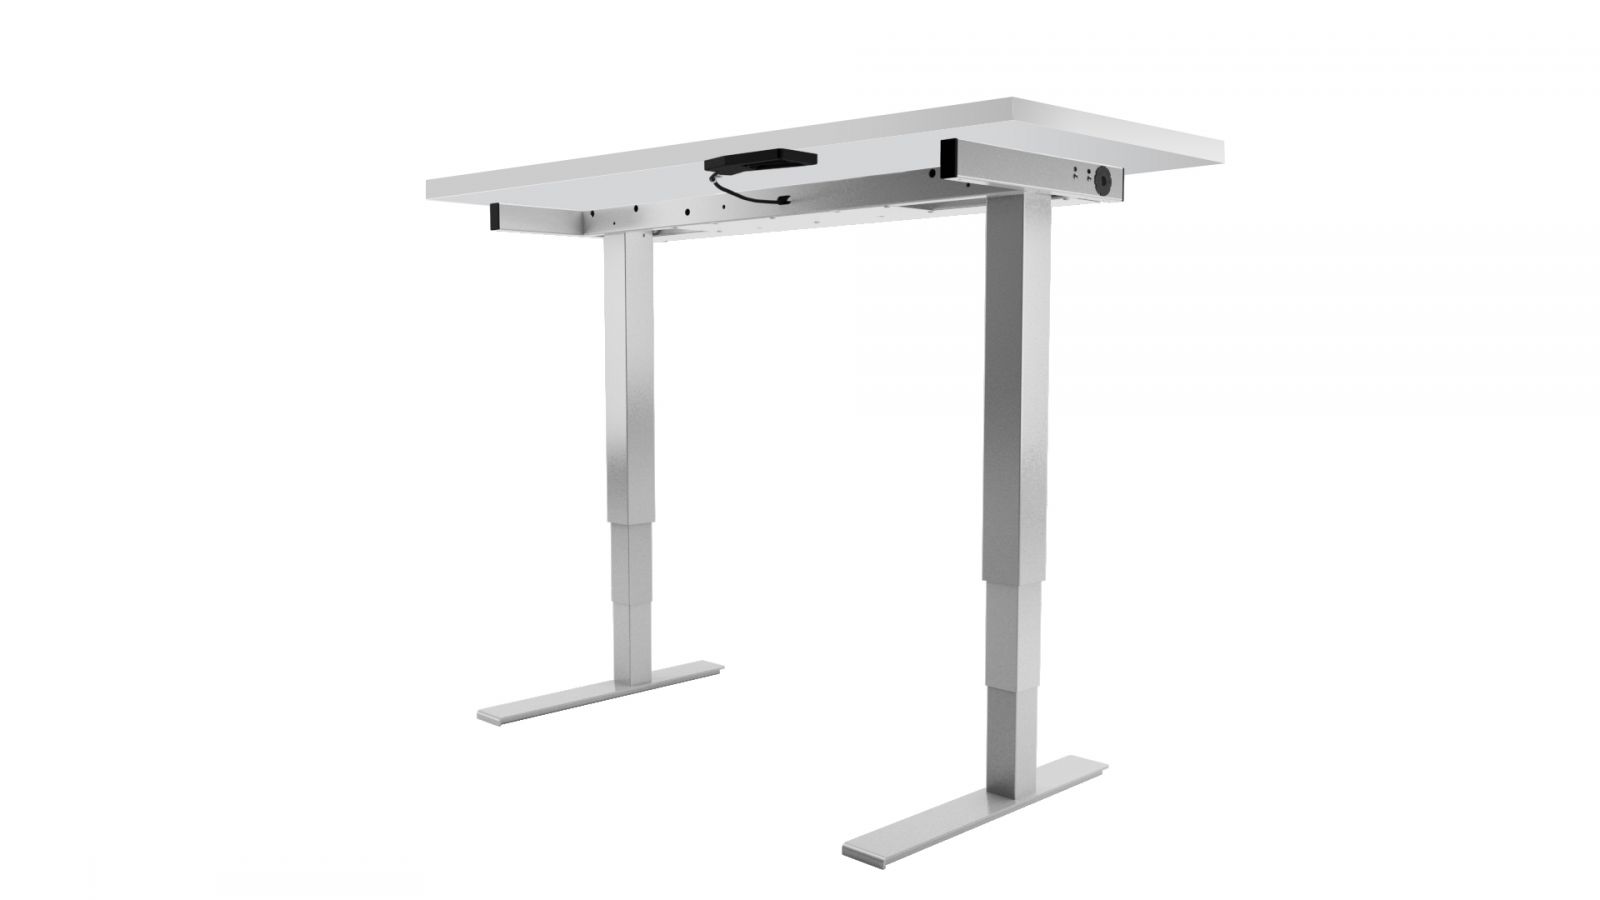 Weight Adjustable Espree Table Base